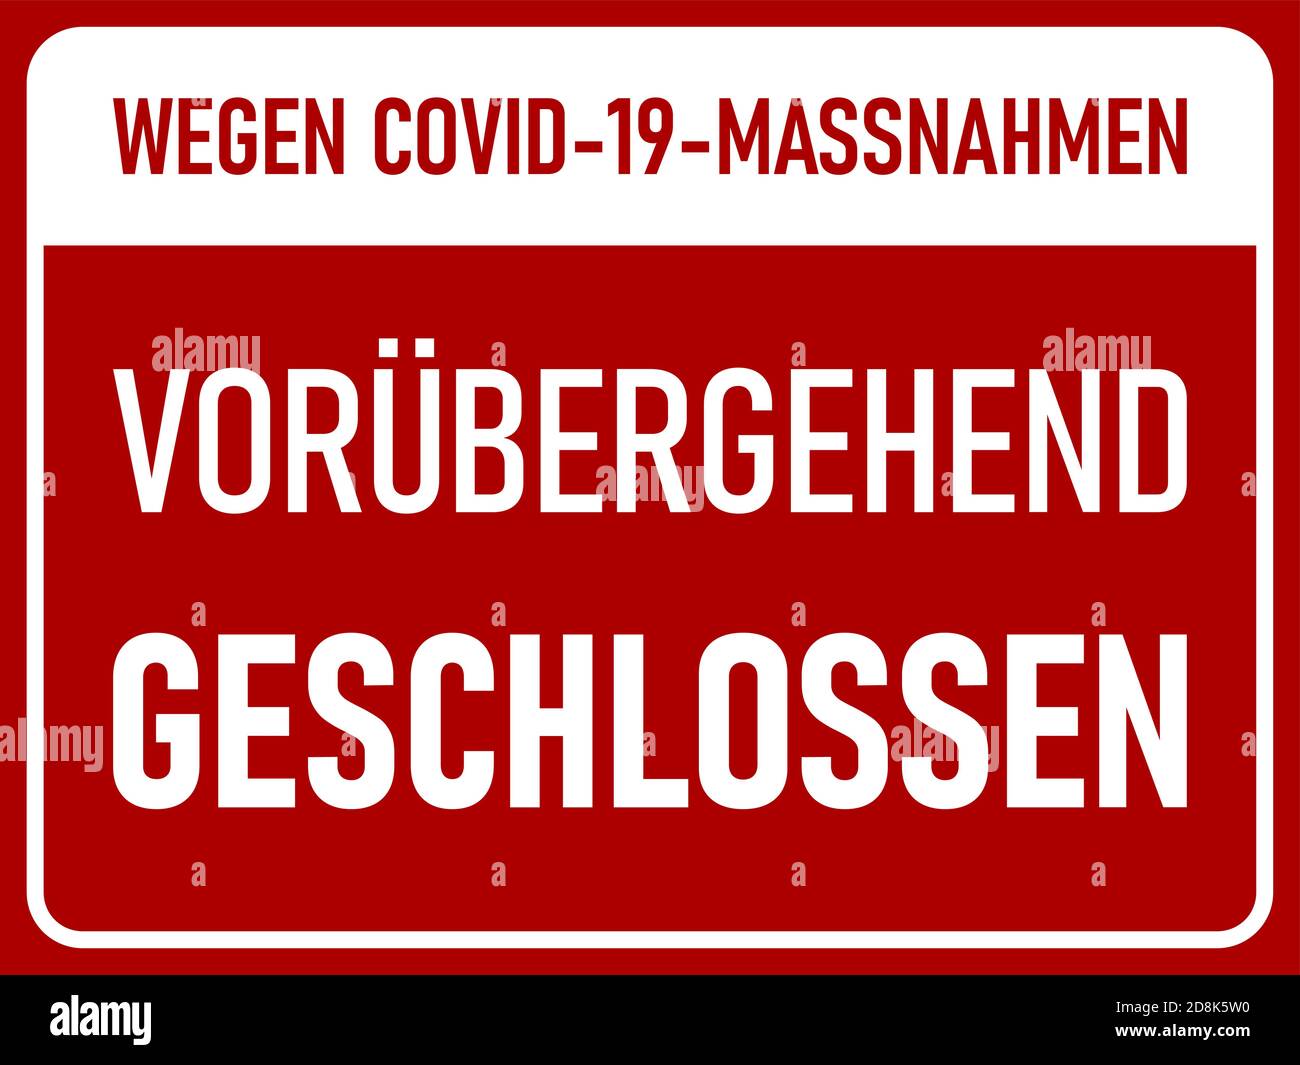 Wegen Covid-19-Massnahmen Vorubergehend Geschlossen ('Temporarily Closed due to Covid-19 Measures' in German) Horizontal Warning Sign. Vector Image. Stock Vector